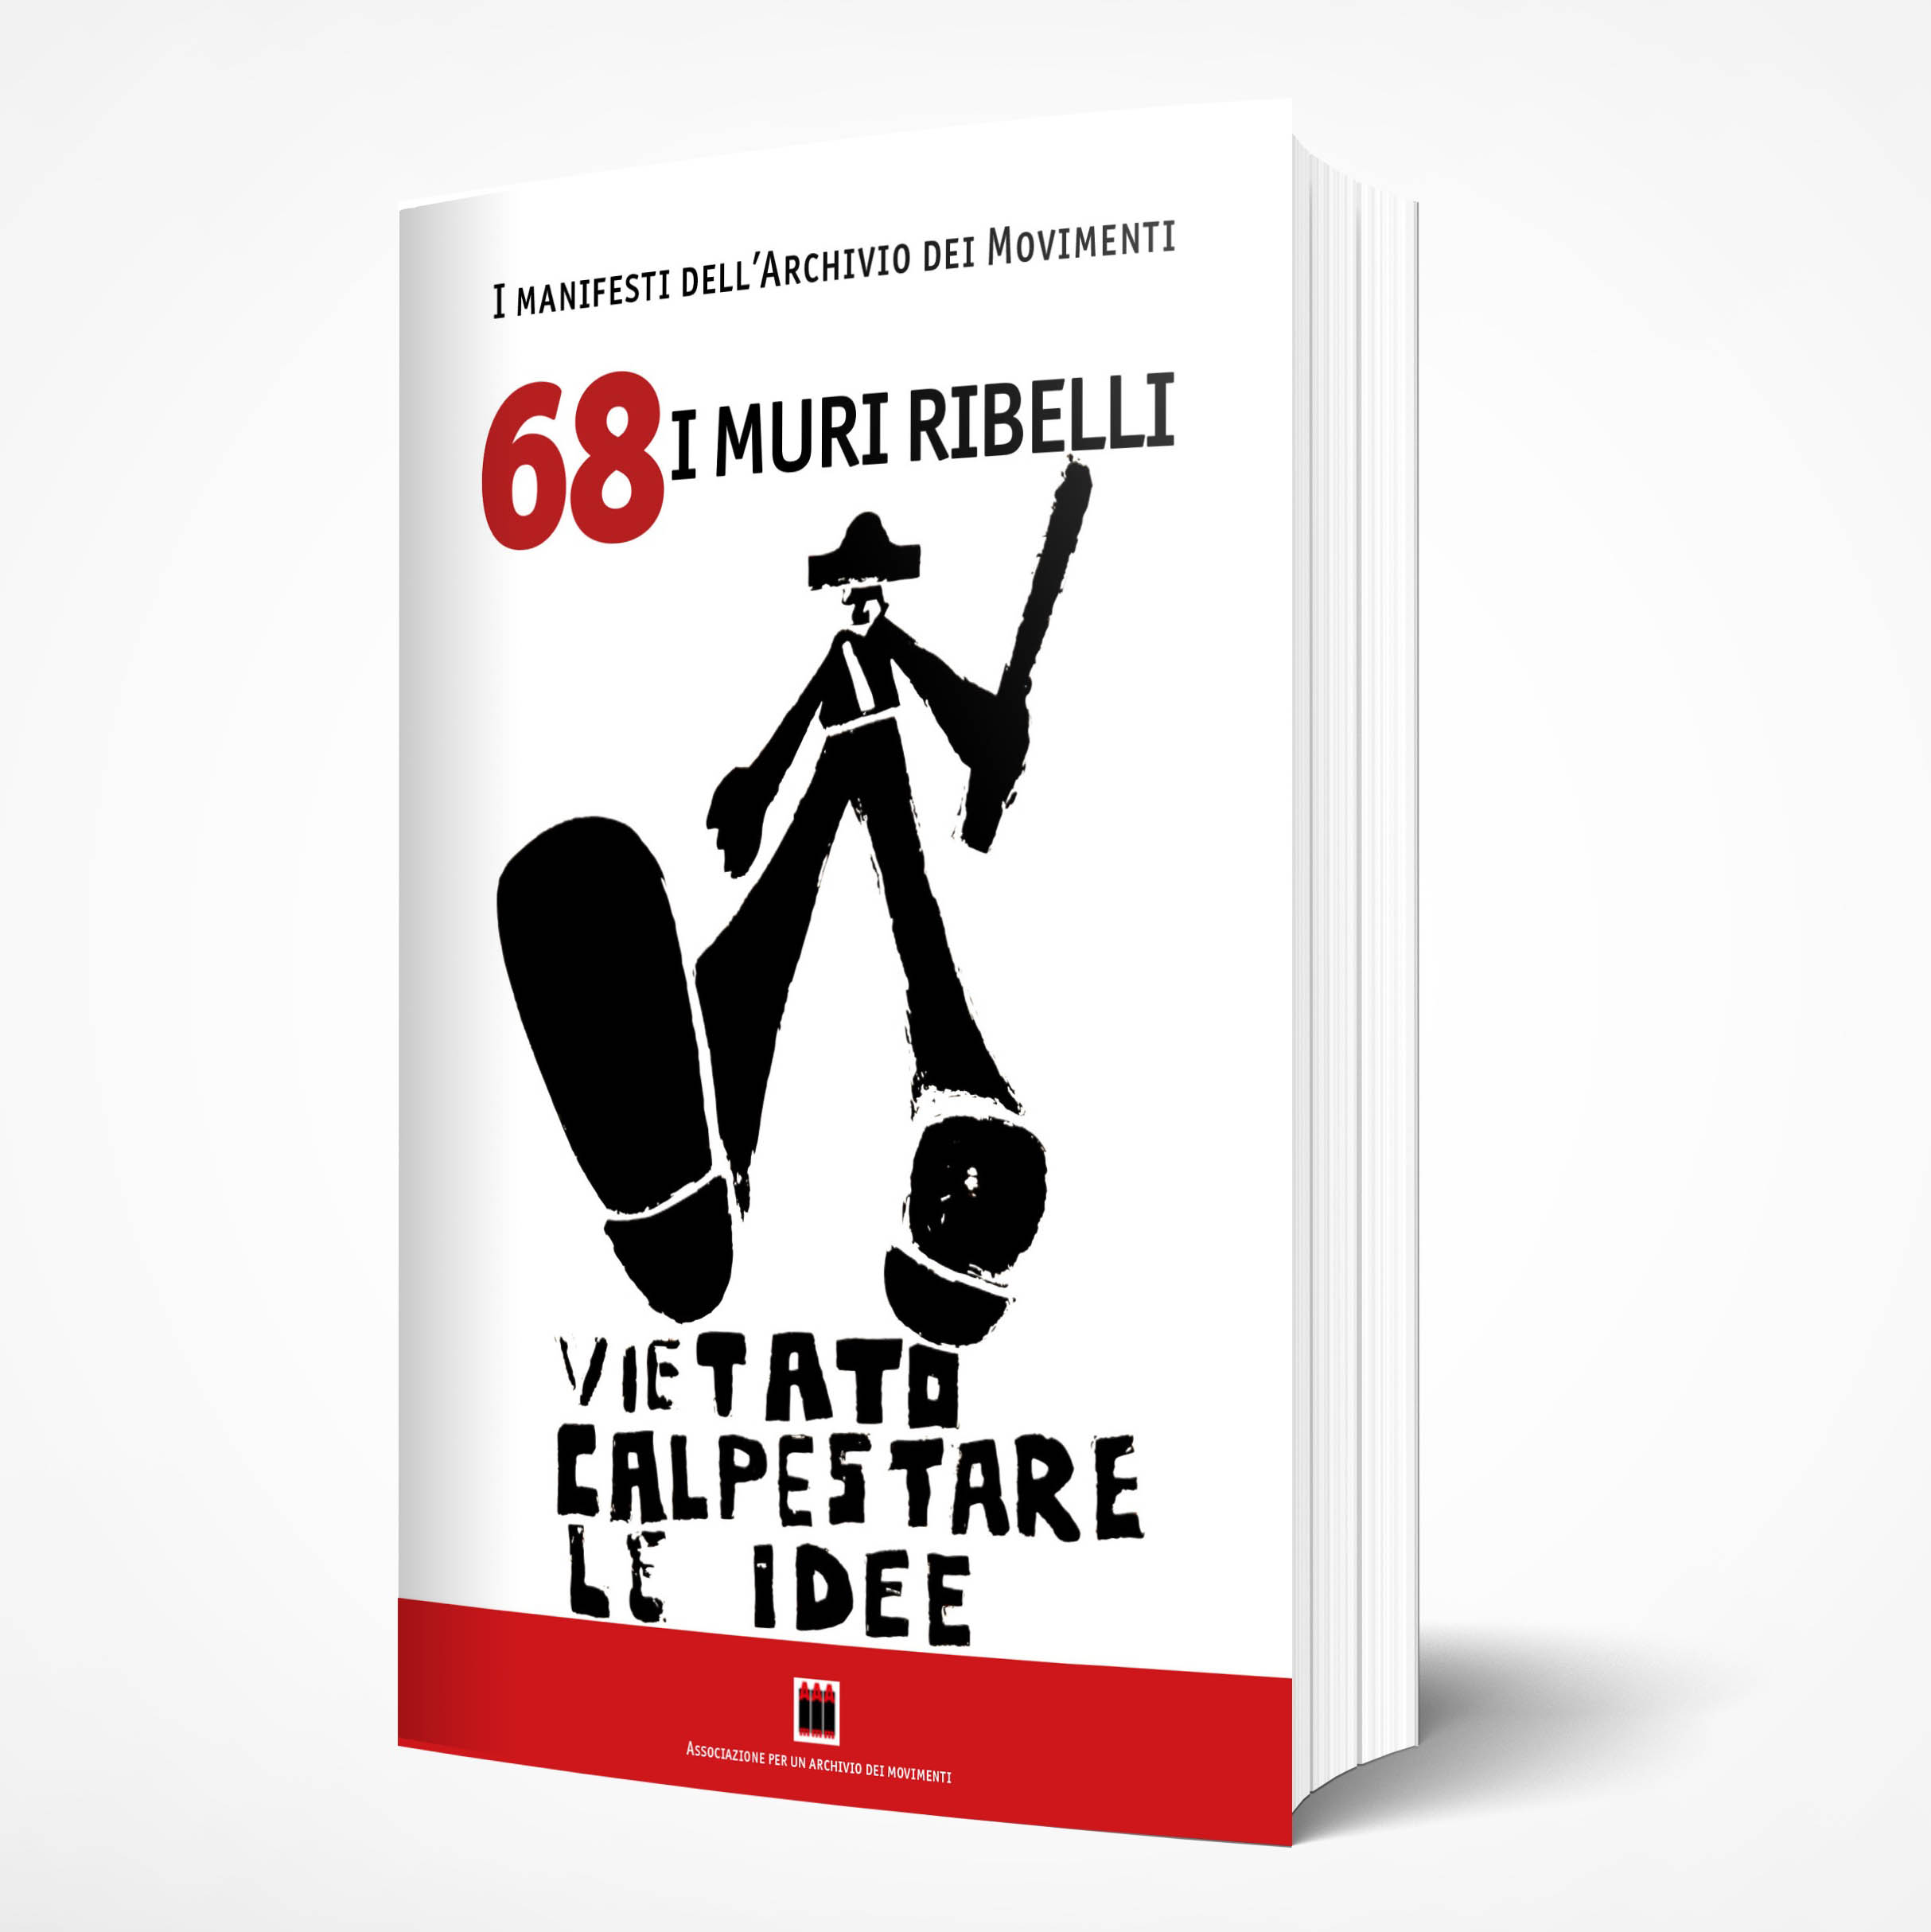 Catalogo-68-i-muri-ribelli-COPERTINA-Mockup-2.jpg